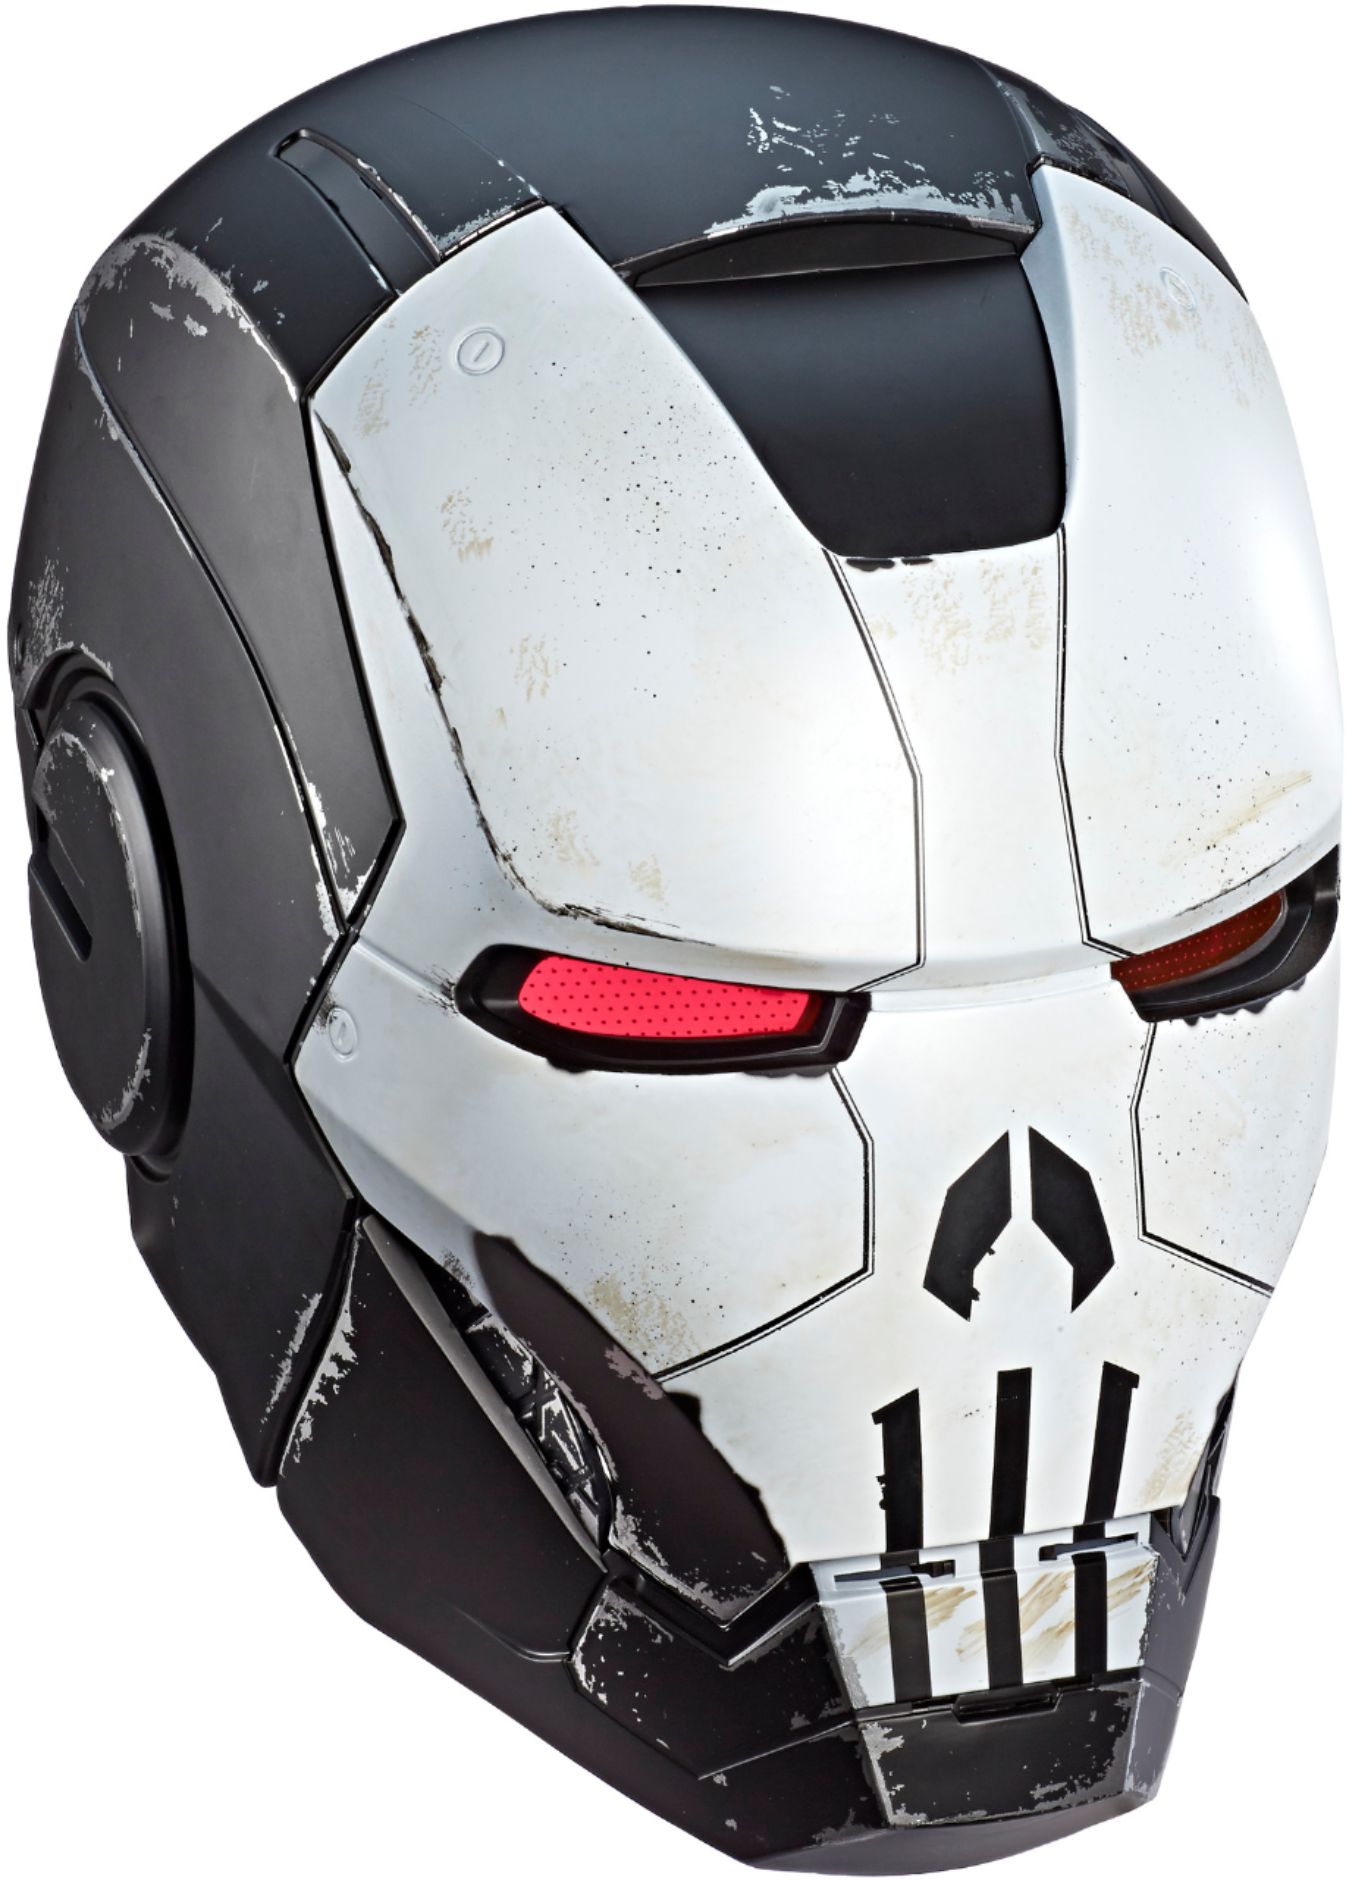 Marvel: The Legends Series - Punisher Electronic Helmet